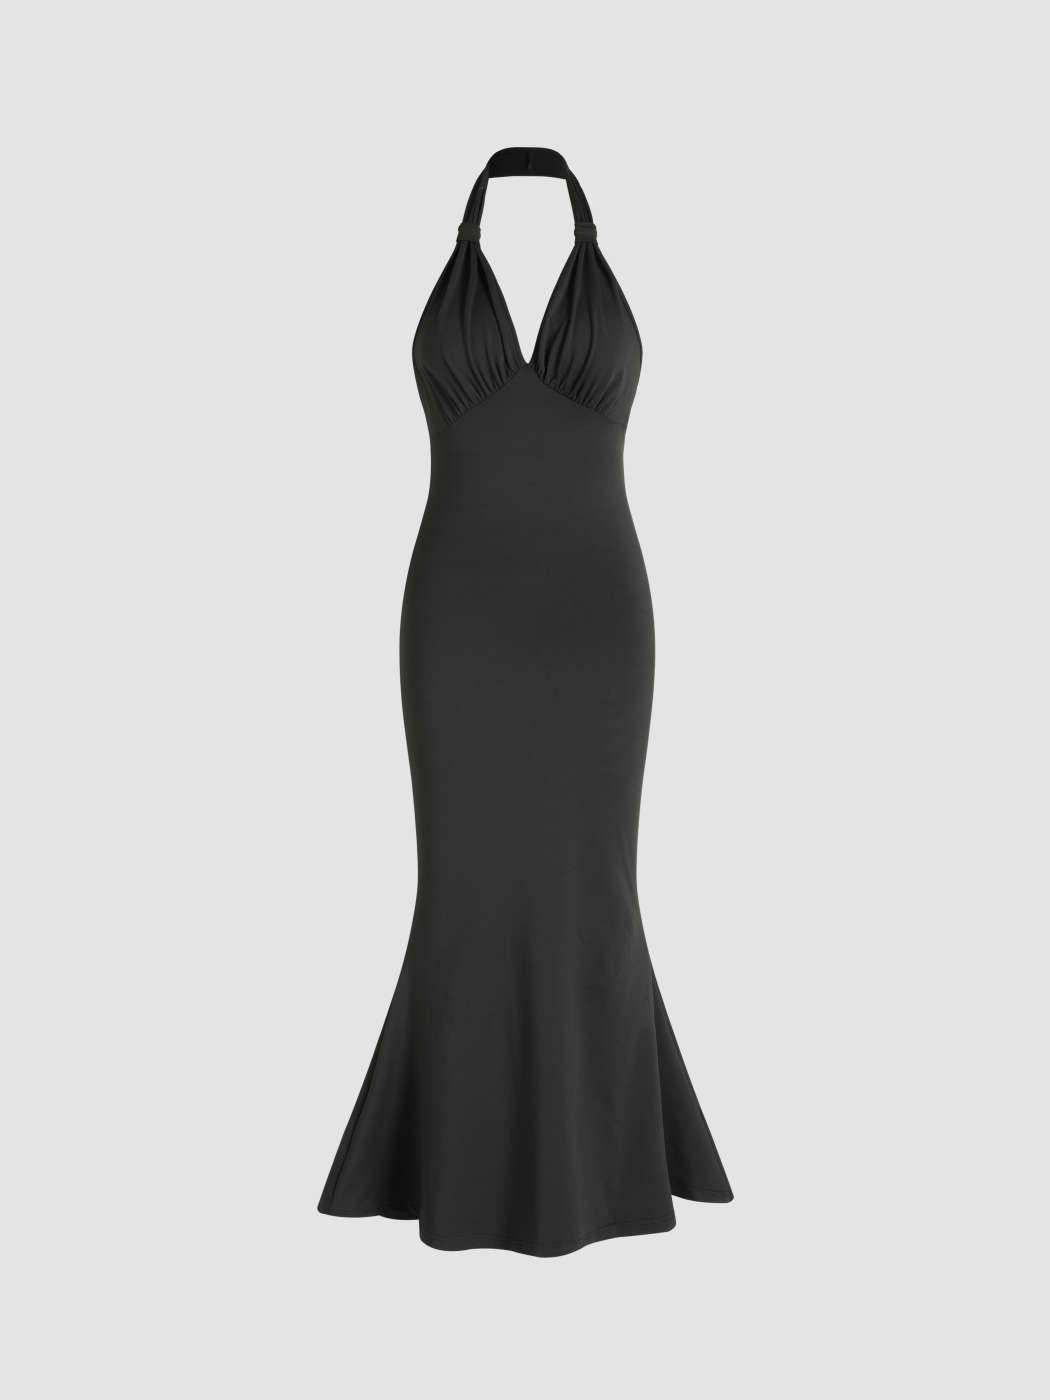 Black Halter Maxi Dress - Halter Maxi Dress - Mermaid Maxi Dress